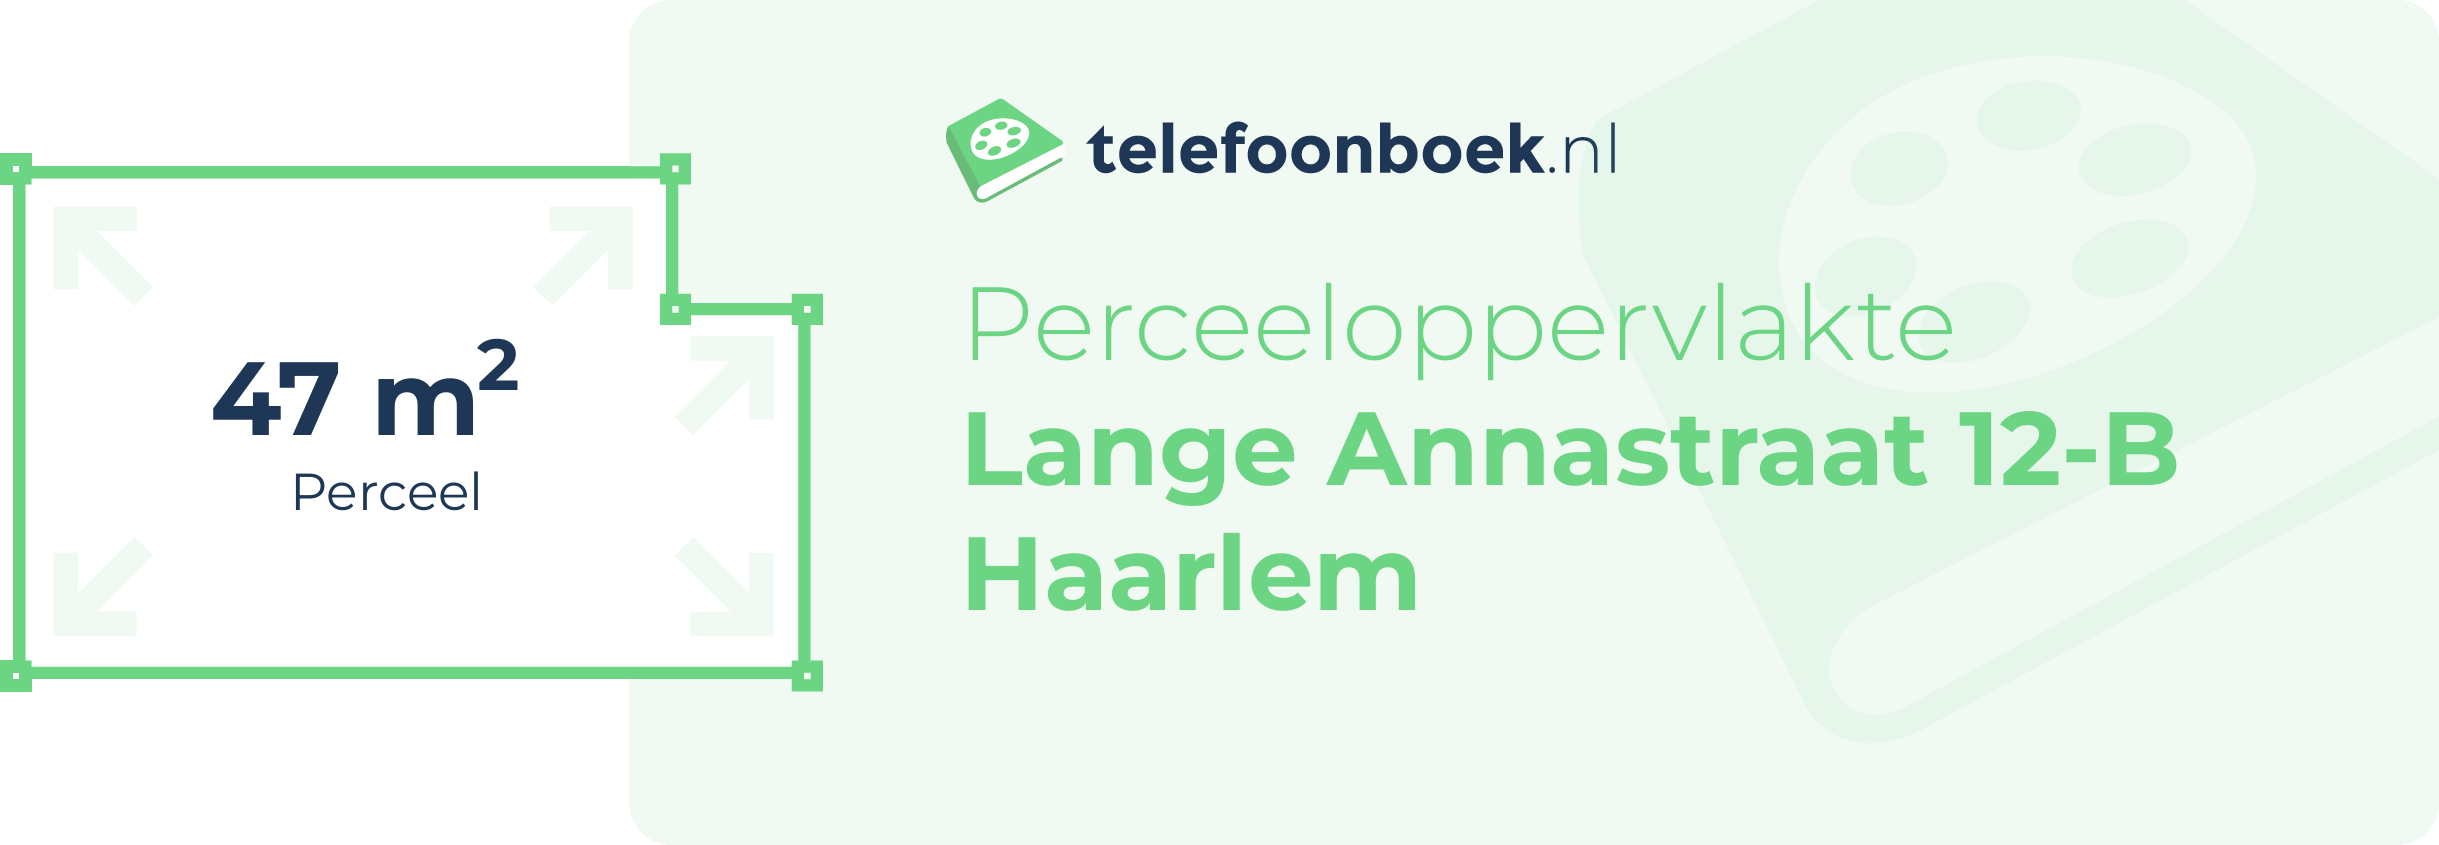 Perceeloppervlakte Lange Annastraat 12-B Haarlem